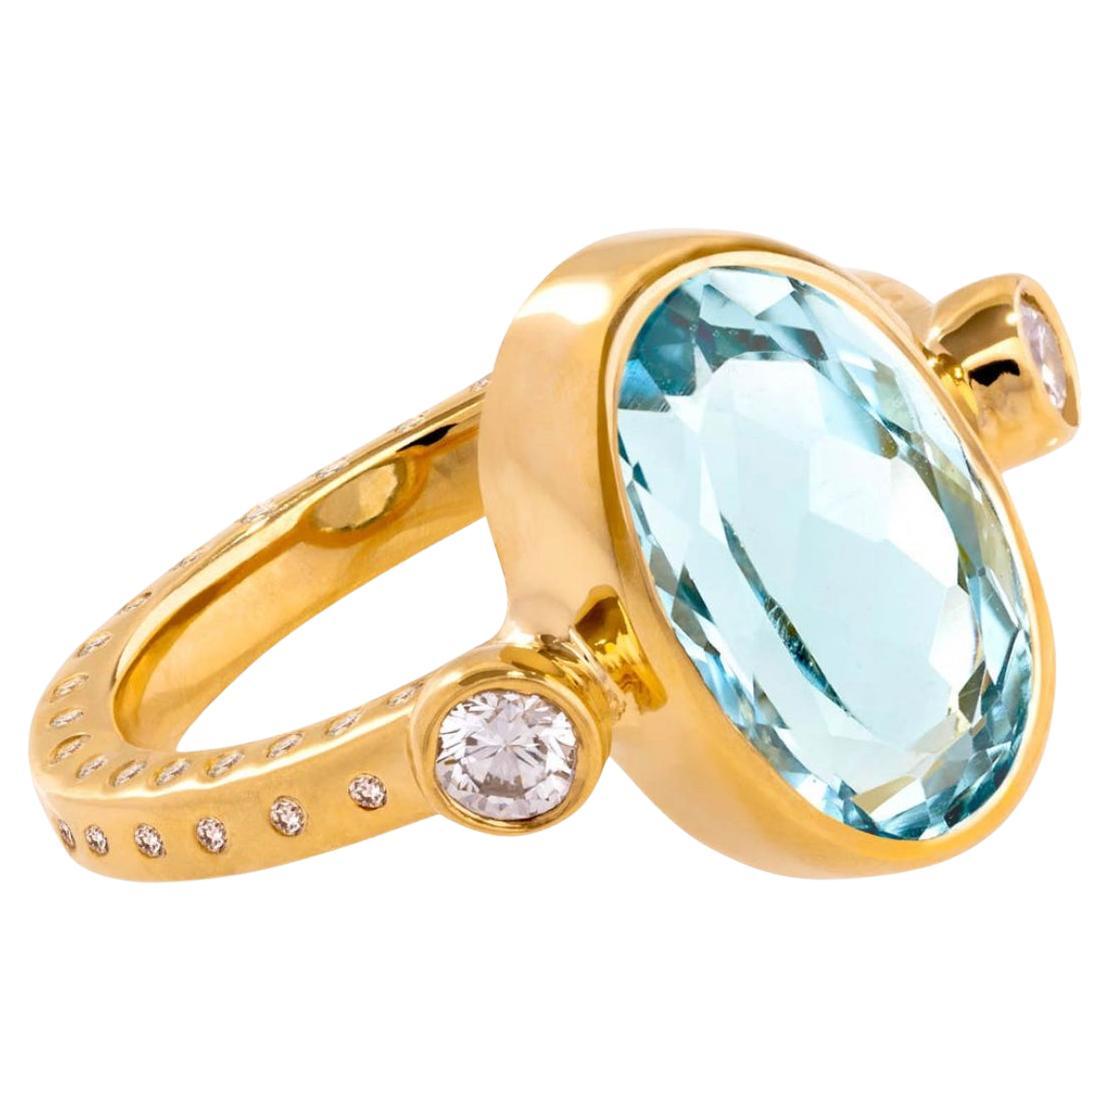 Paris & Lily, 22K Gold, Aquamarine and Diamond Ring